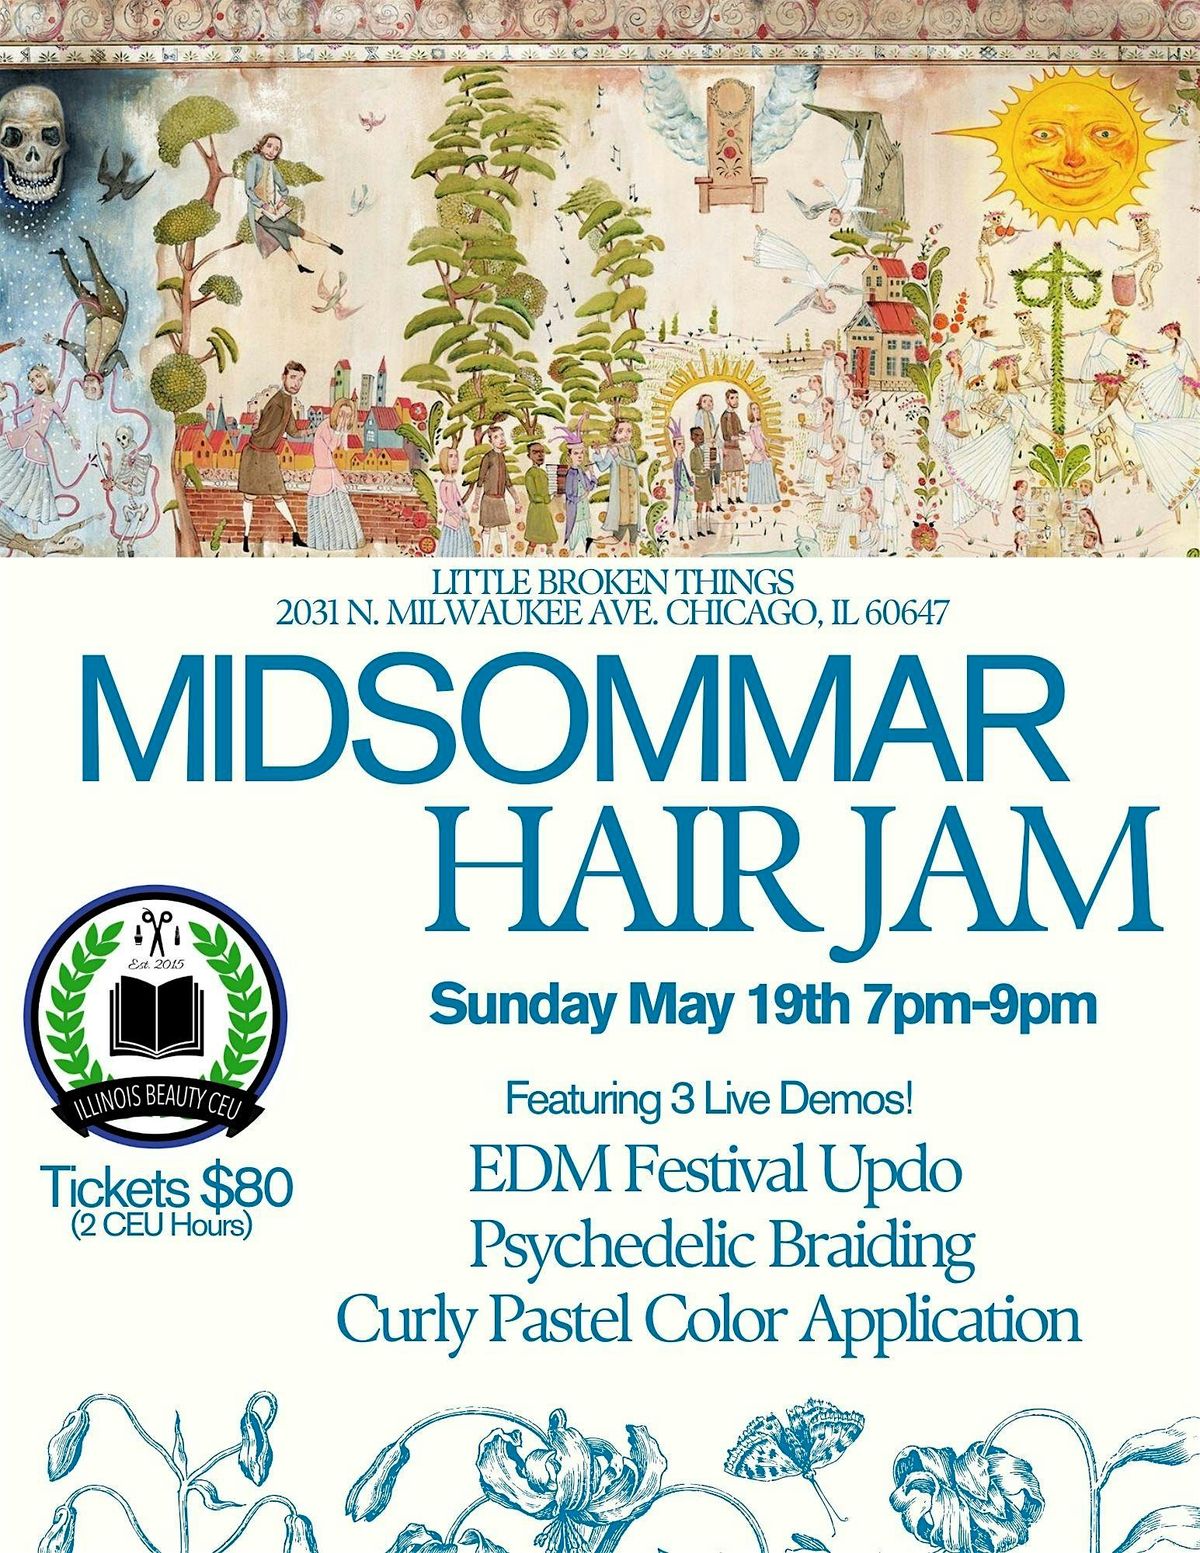 LBT\u2019s Midsommar Hair Jam